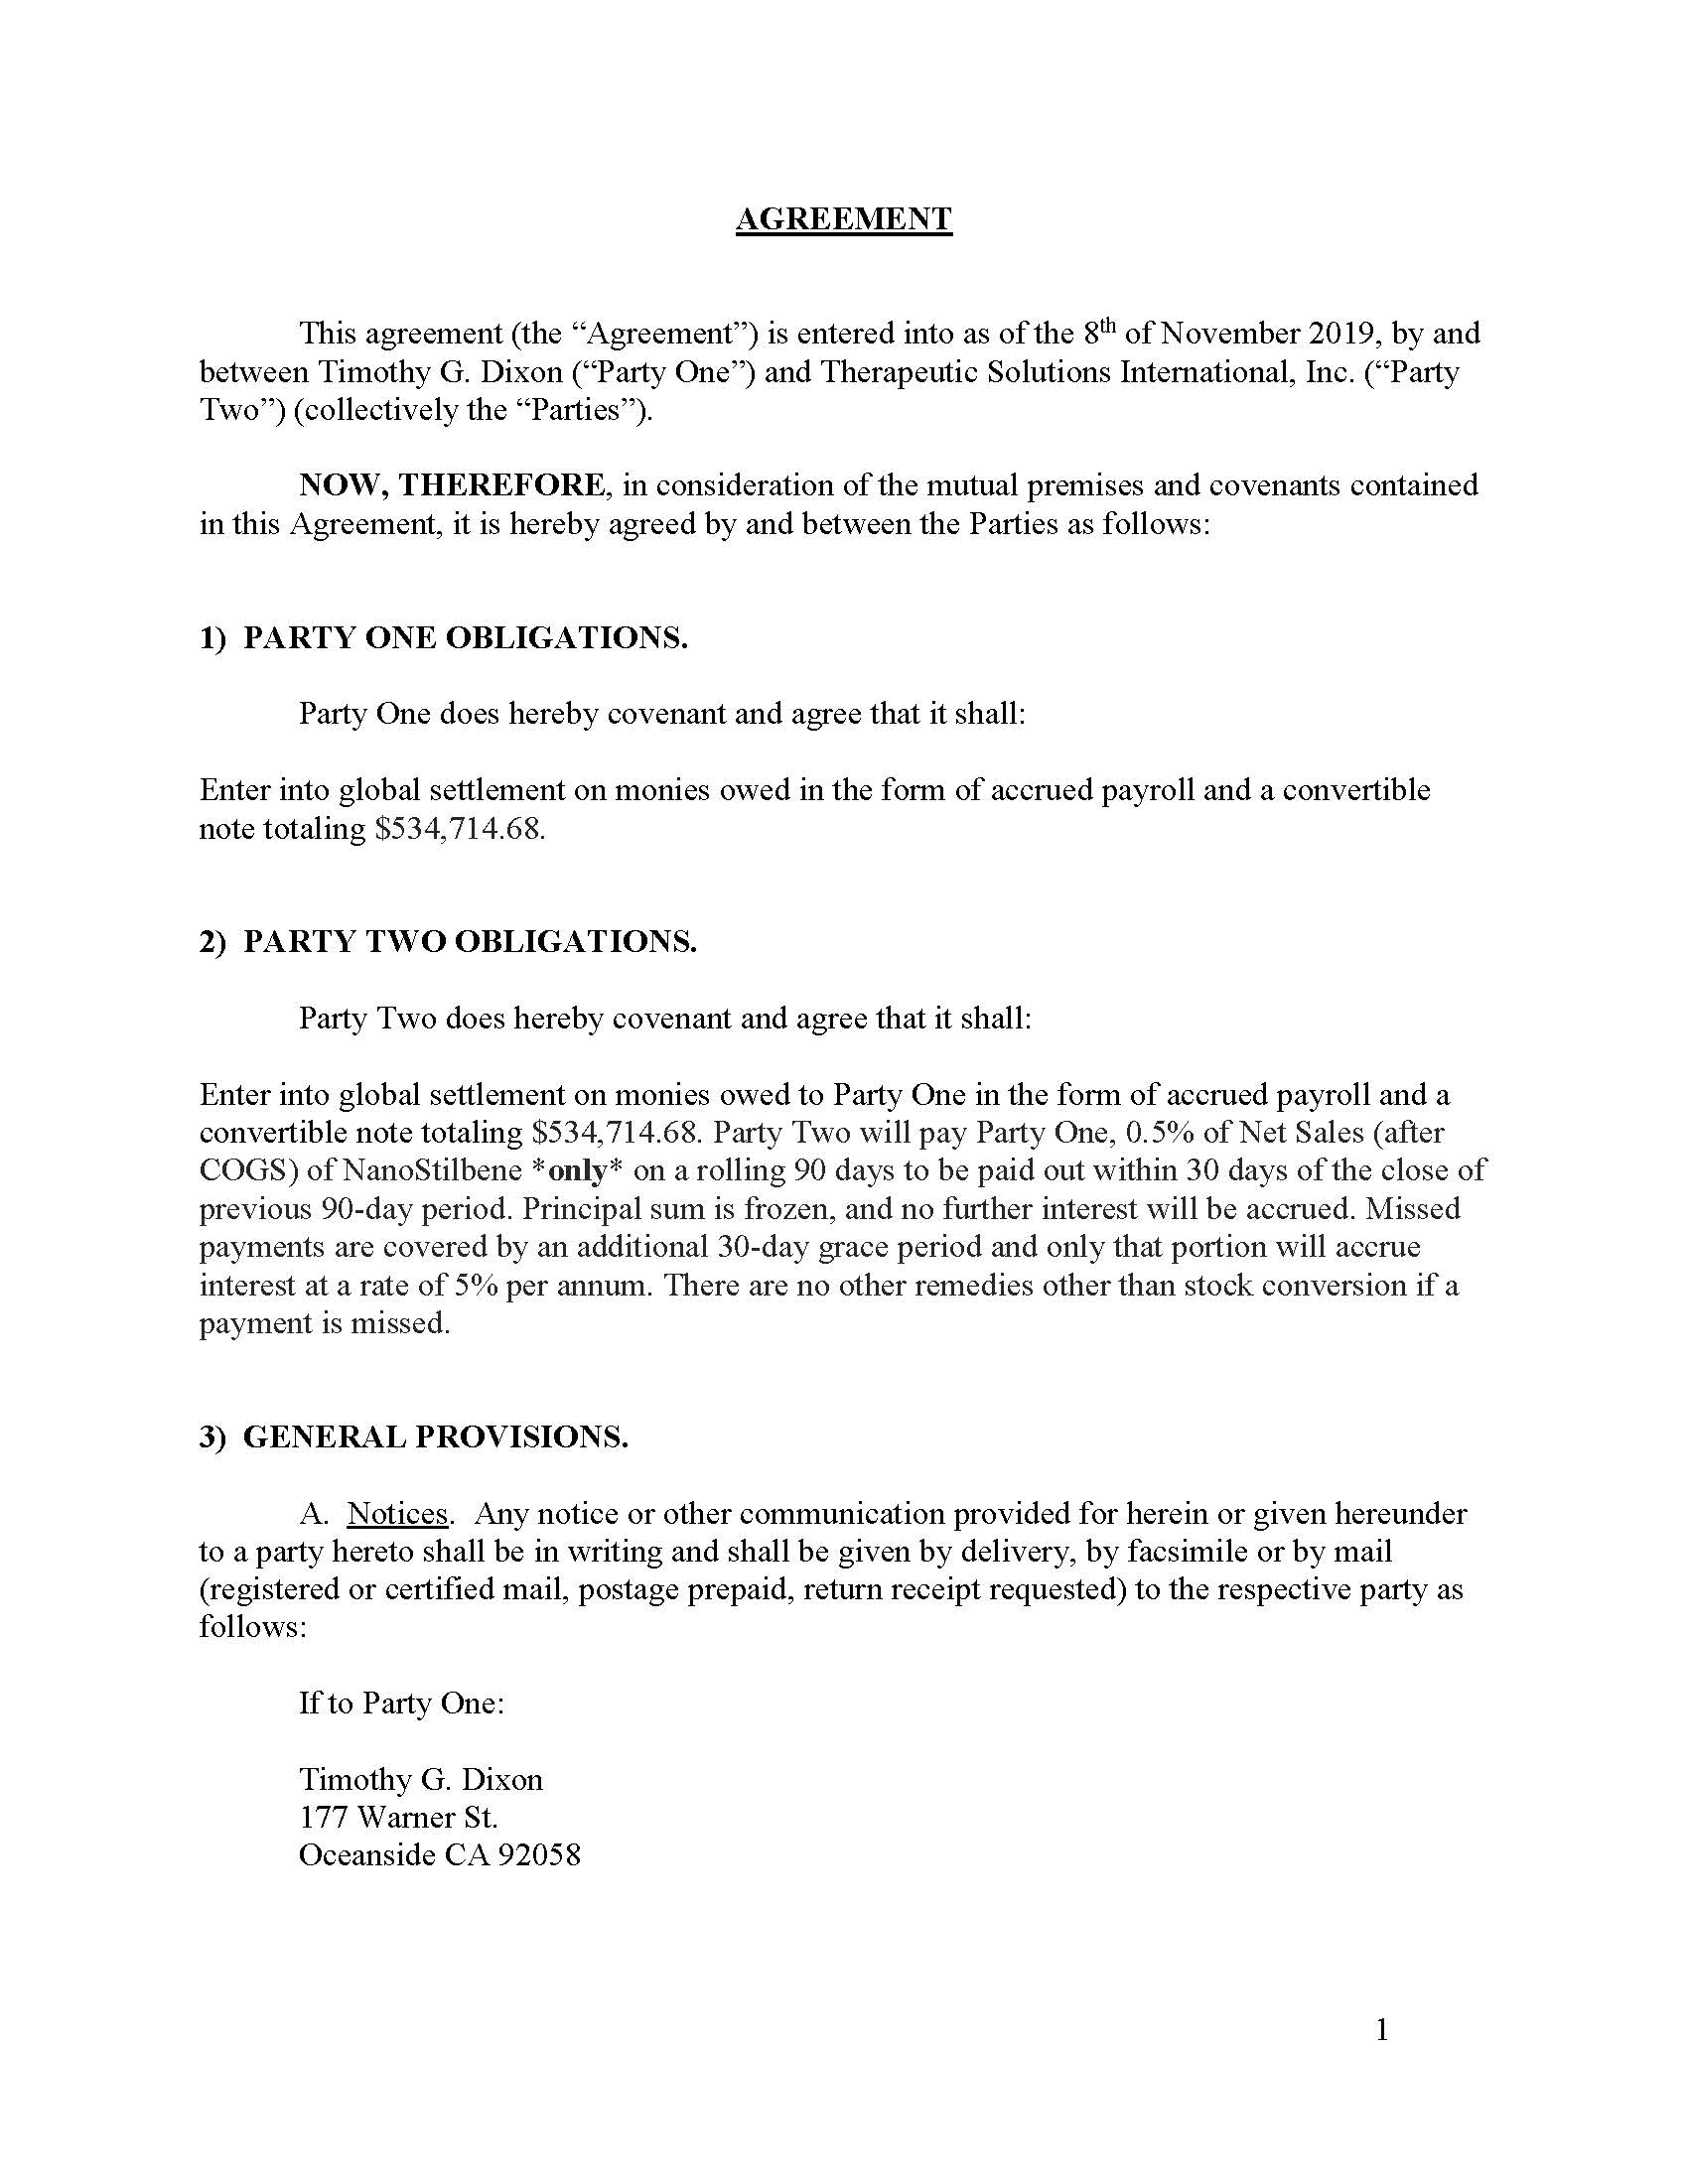 settlement-agreement-dixon_11-8-19_Page_1.jpg